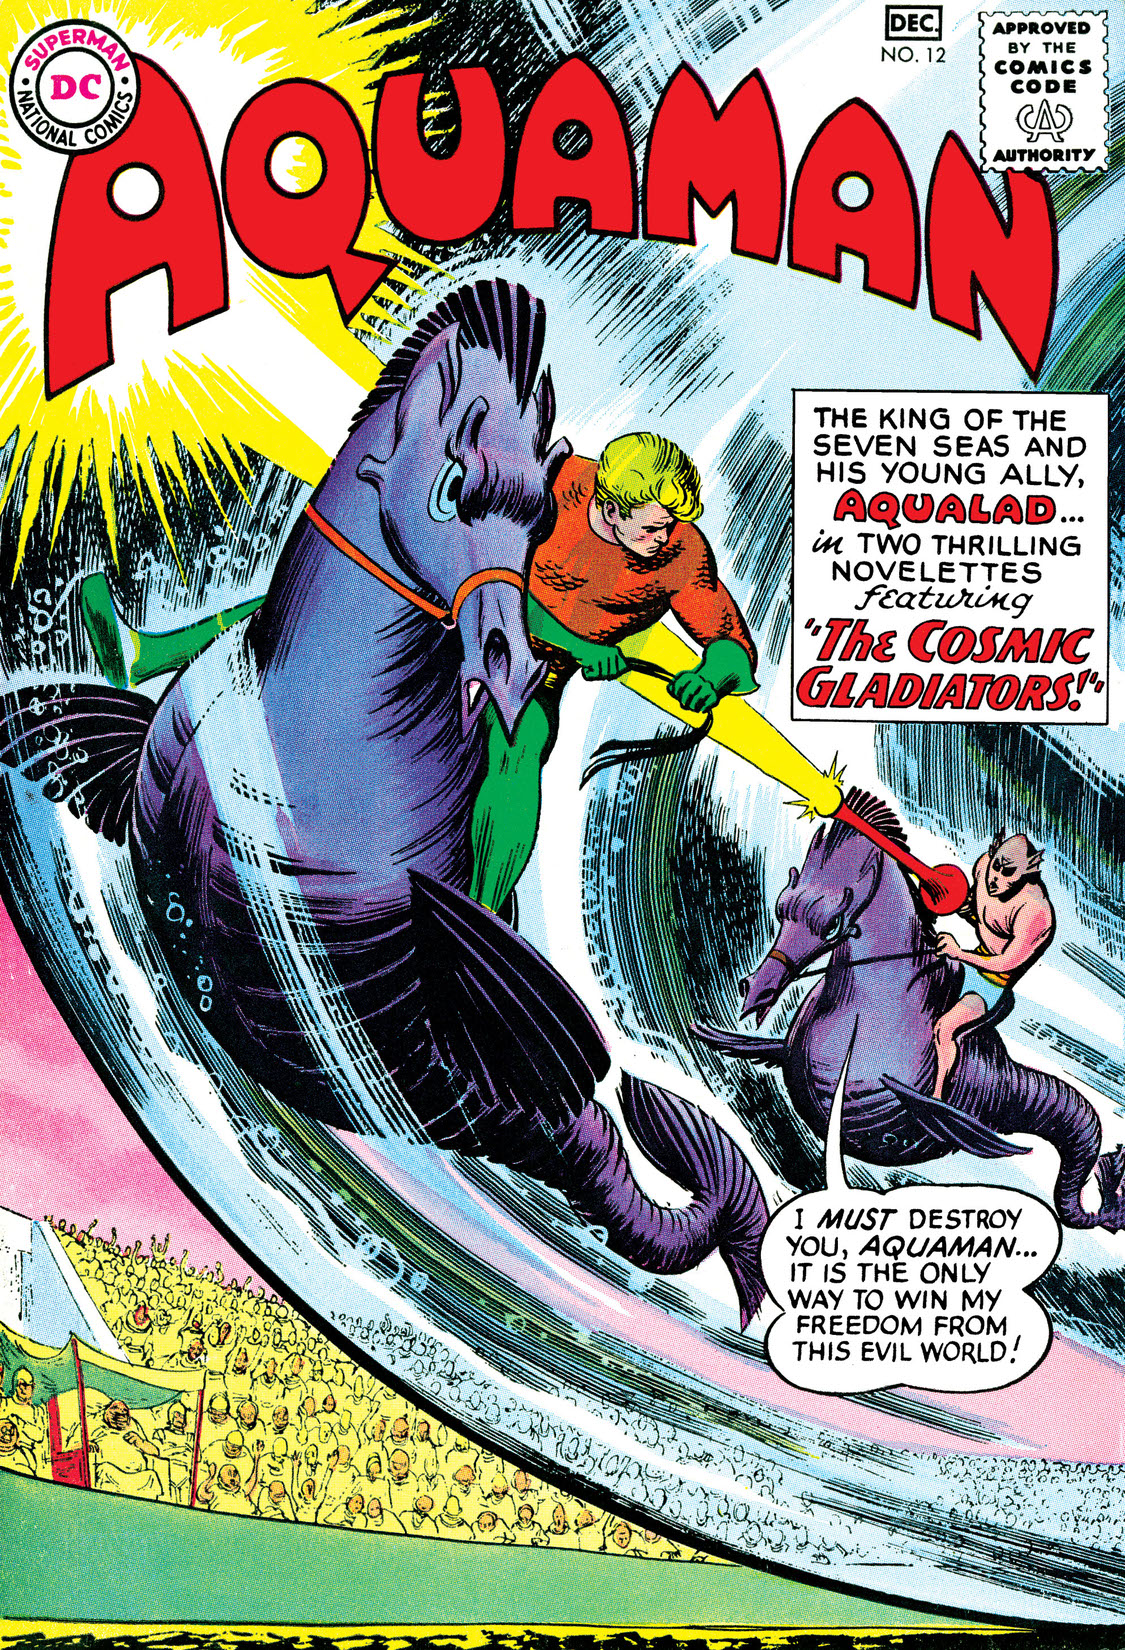 Aquaman (1962-) #12 preview images